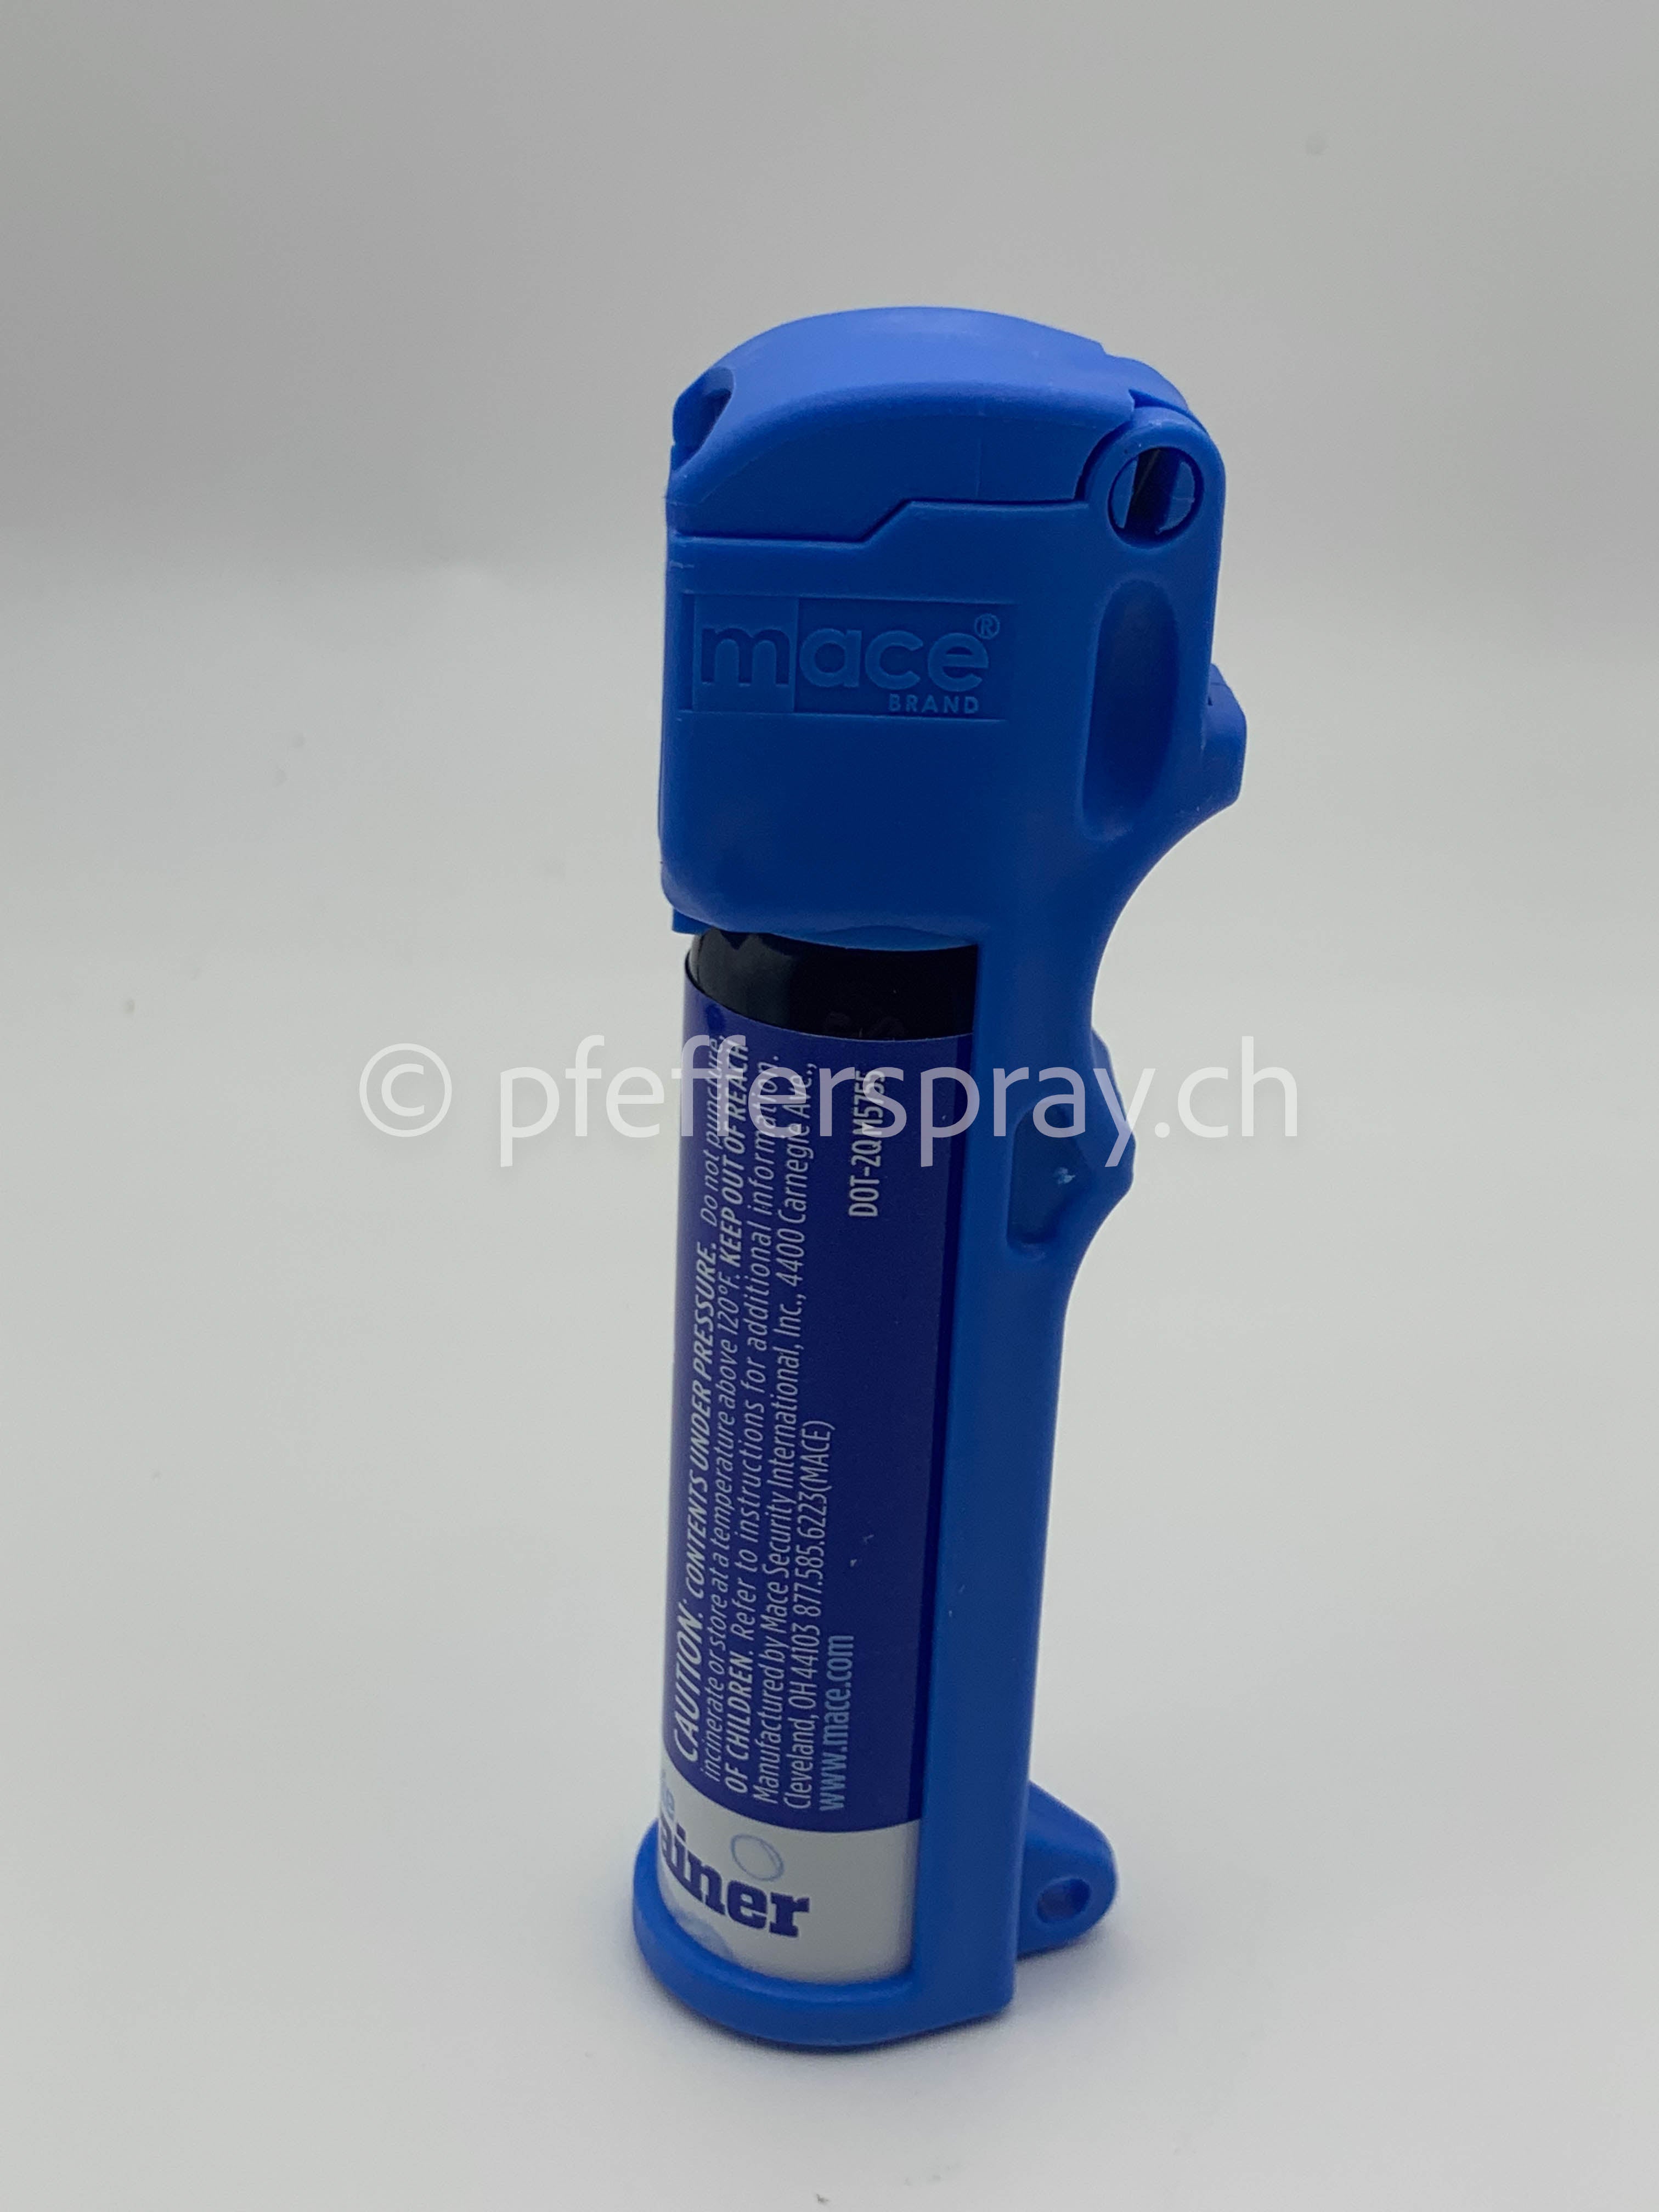 Mace - Pepper Spray - Personal - 18ml - Wide Jet - Test Spray 